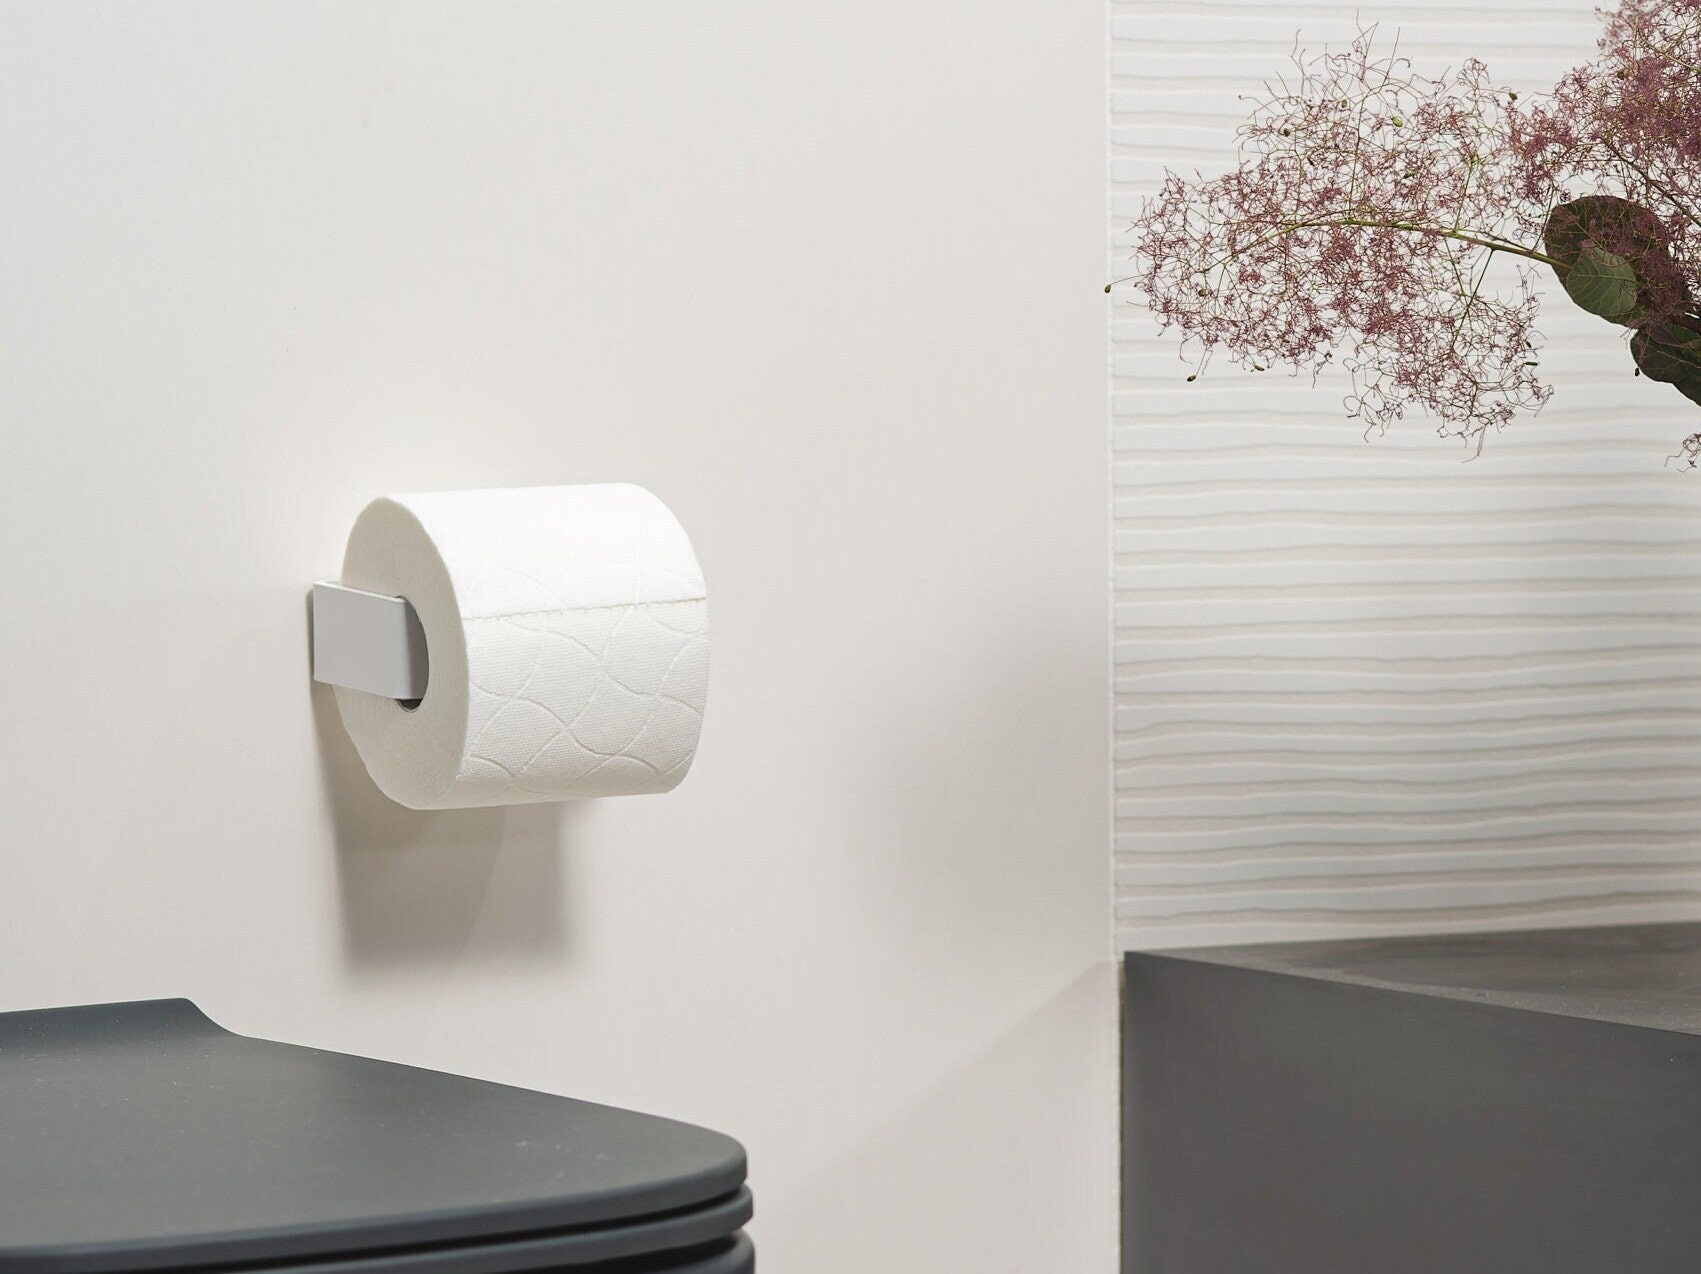 Modern Farmhouse Black Toilet Paper Holder DIARA, Bathroom Accessories Set,  Minimalist Toilet Paper Holders to Modern Bathroom, DABSTORY -  Israel